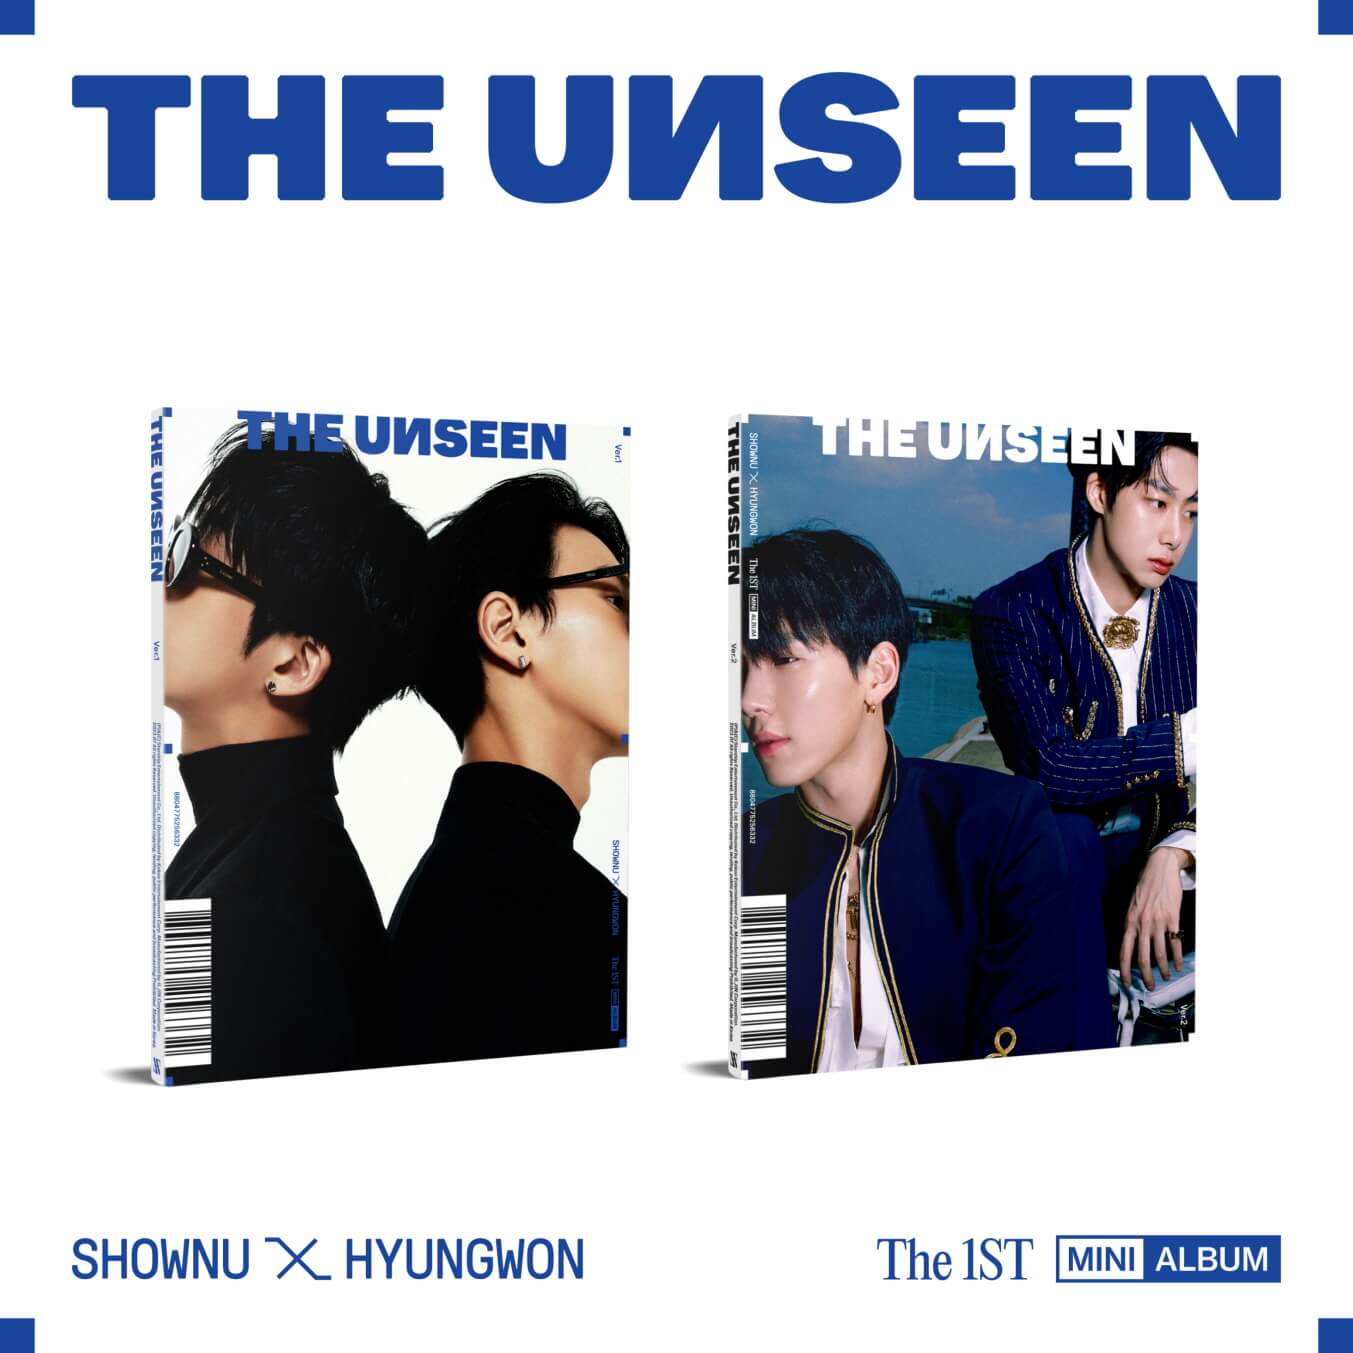 Shownu X Hyungwon 1st Mini Album THE UNSEEN - Ver. 1 / Ver. 2